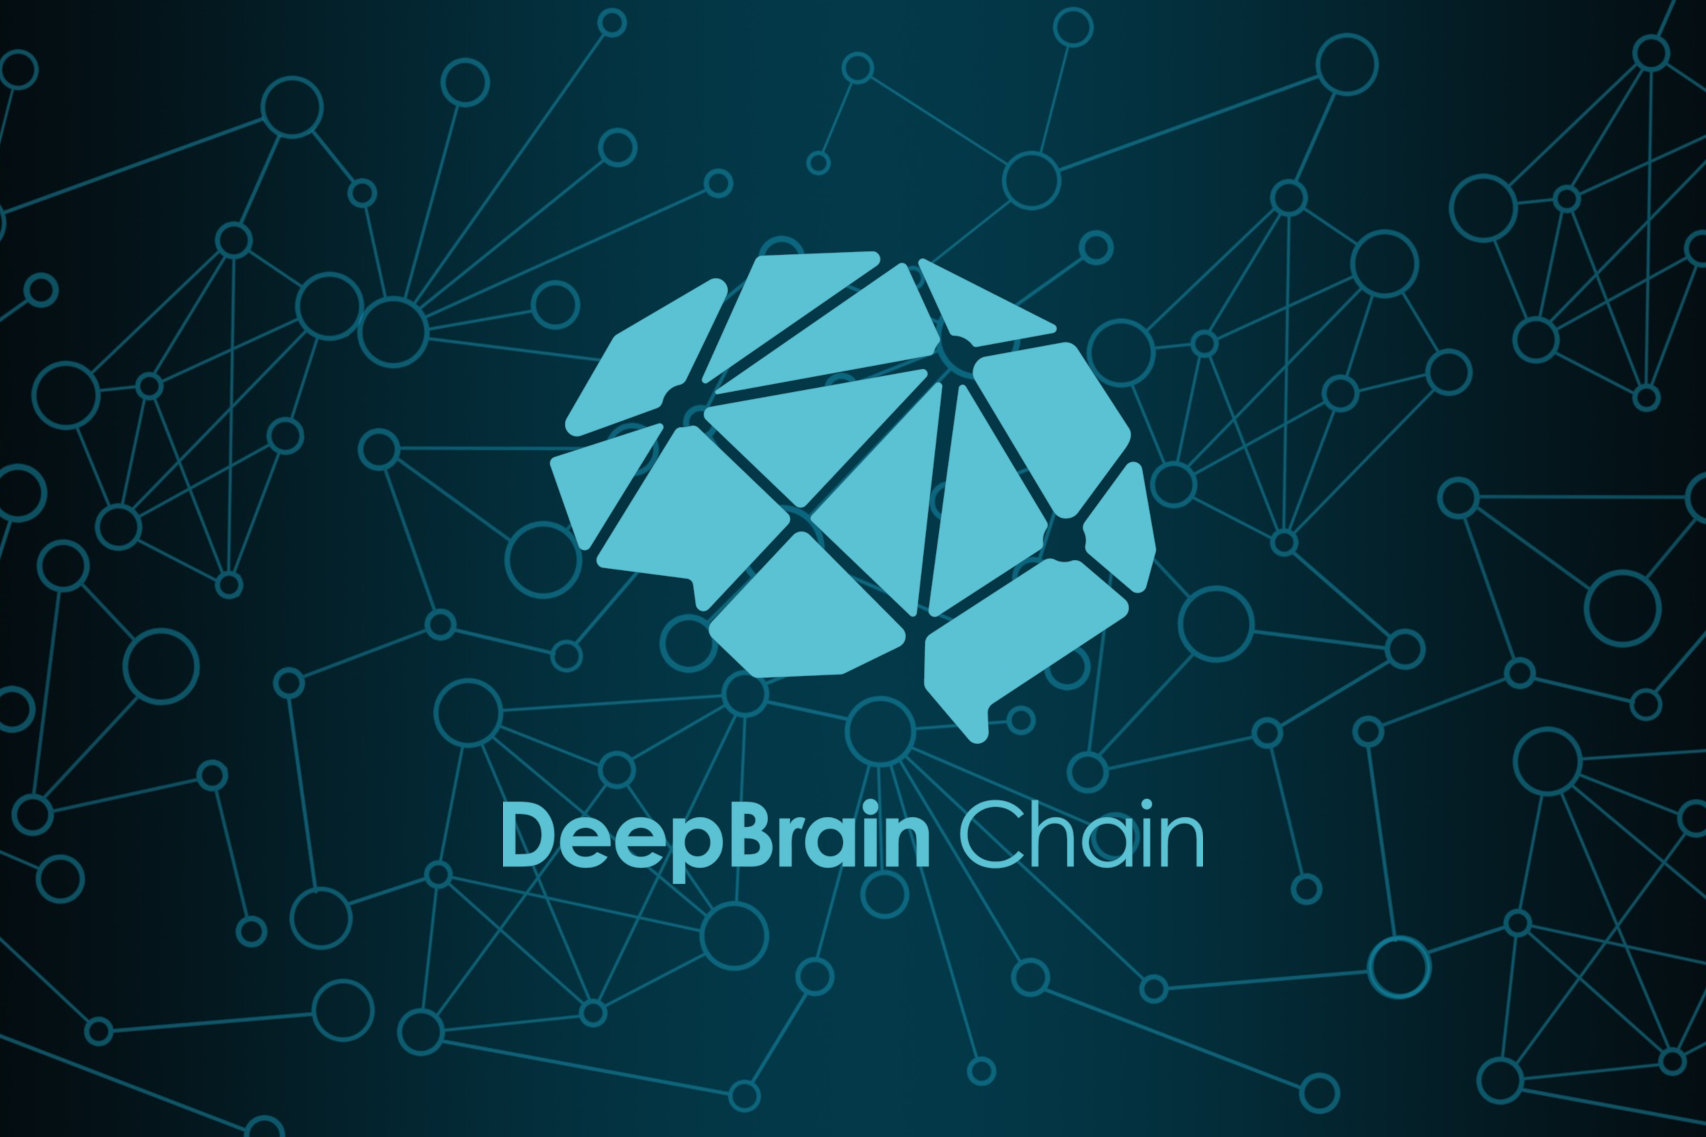 DeepBrain Chain Runs First AI Training Models on Testnet